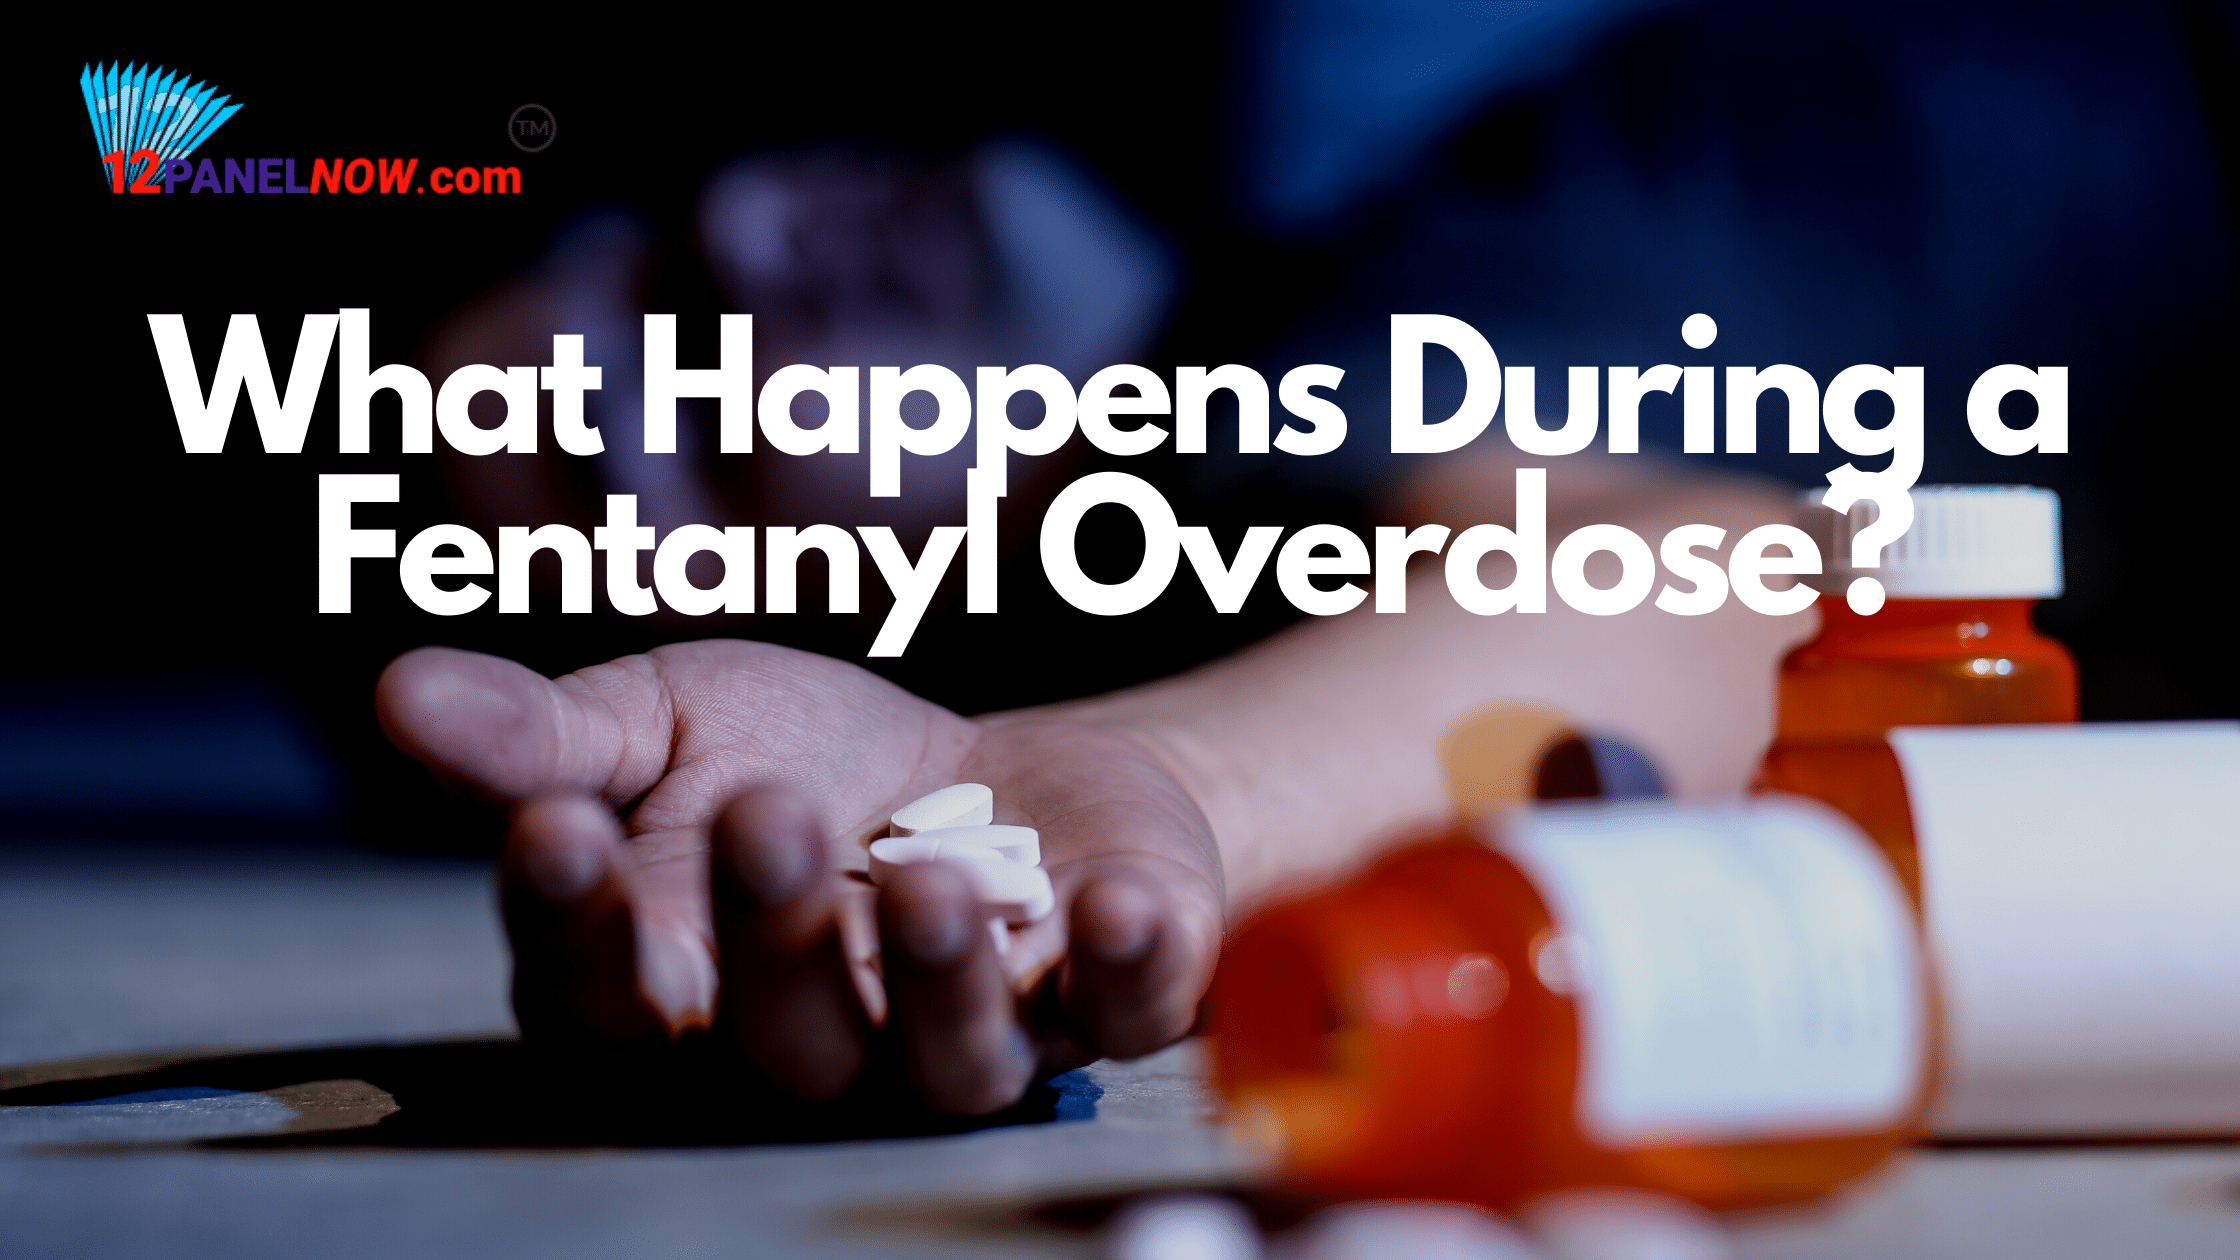 Effects of Fentanyl Overdose - 12PanelNow